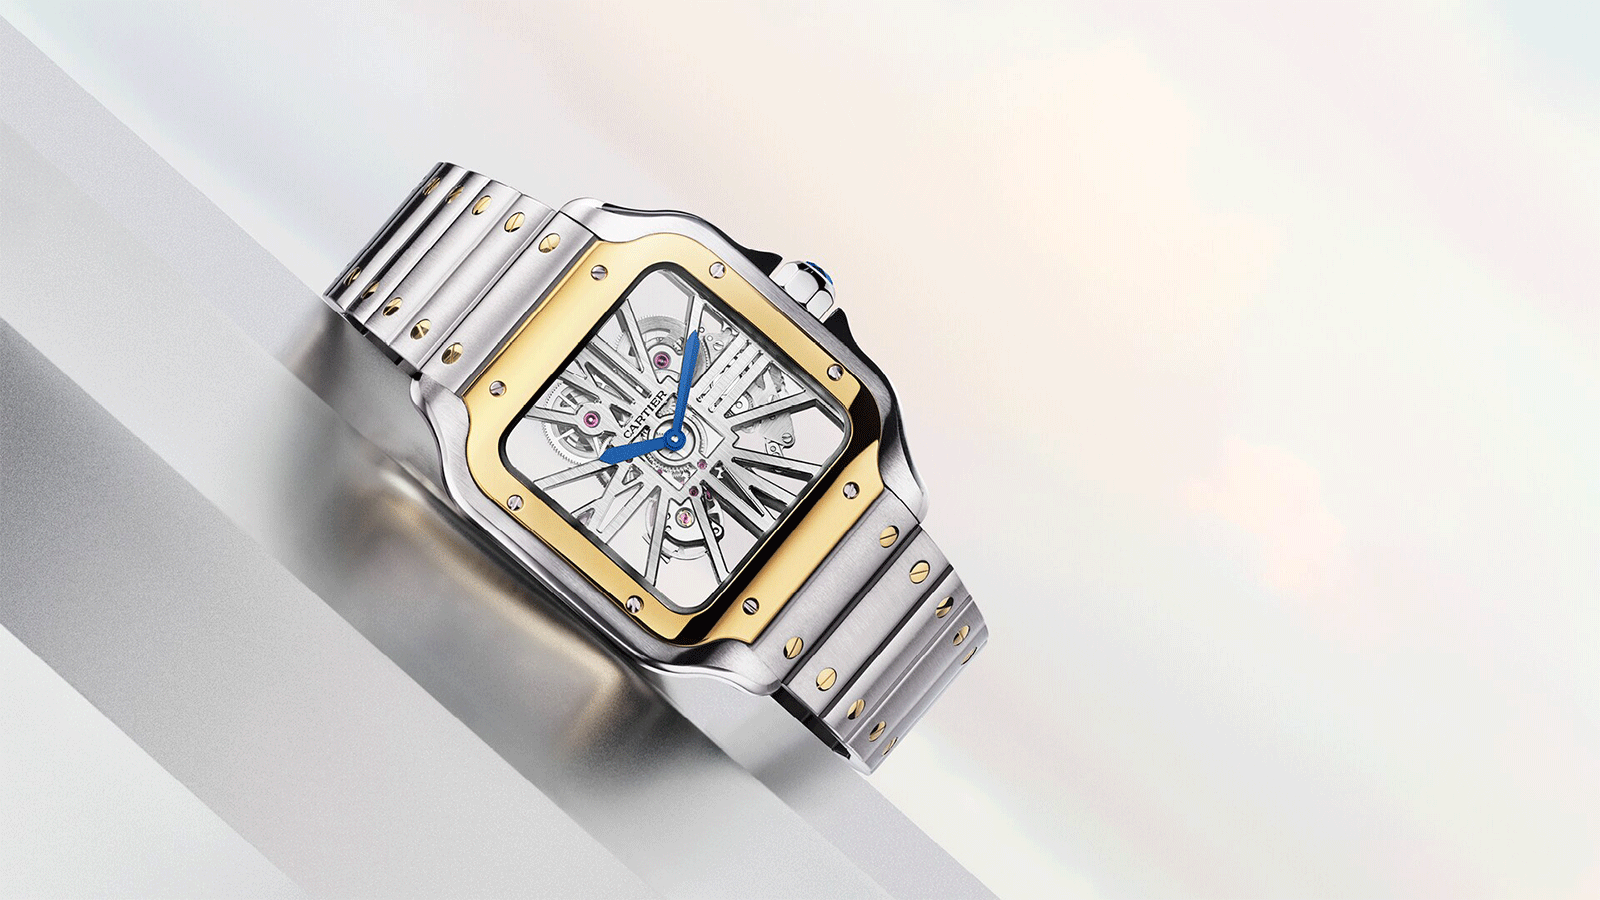 Santos de Cartier Watch - WHSA0012